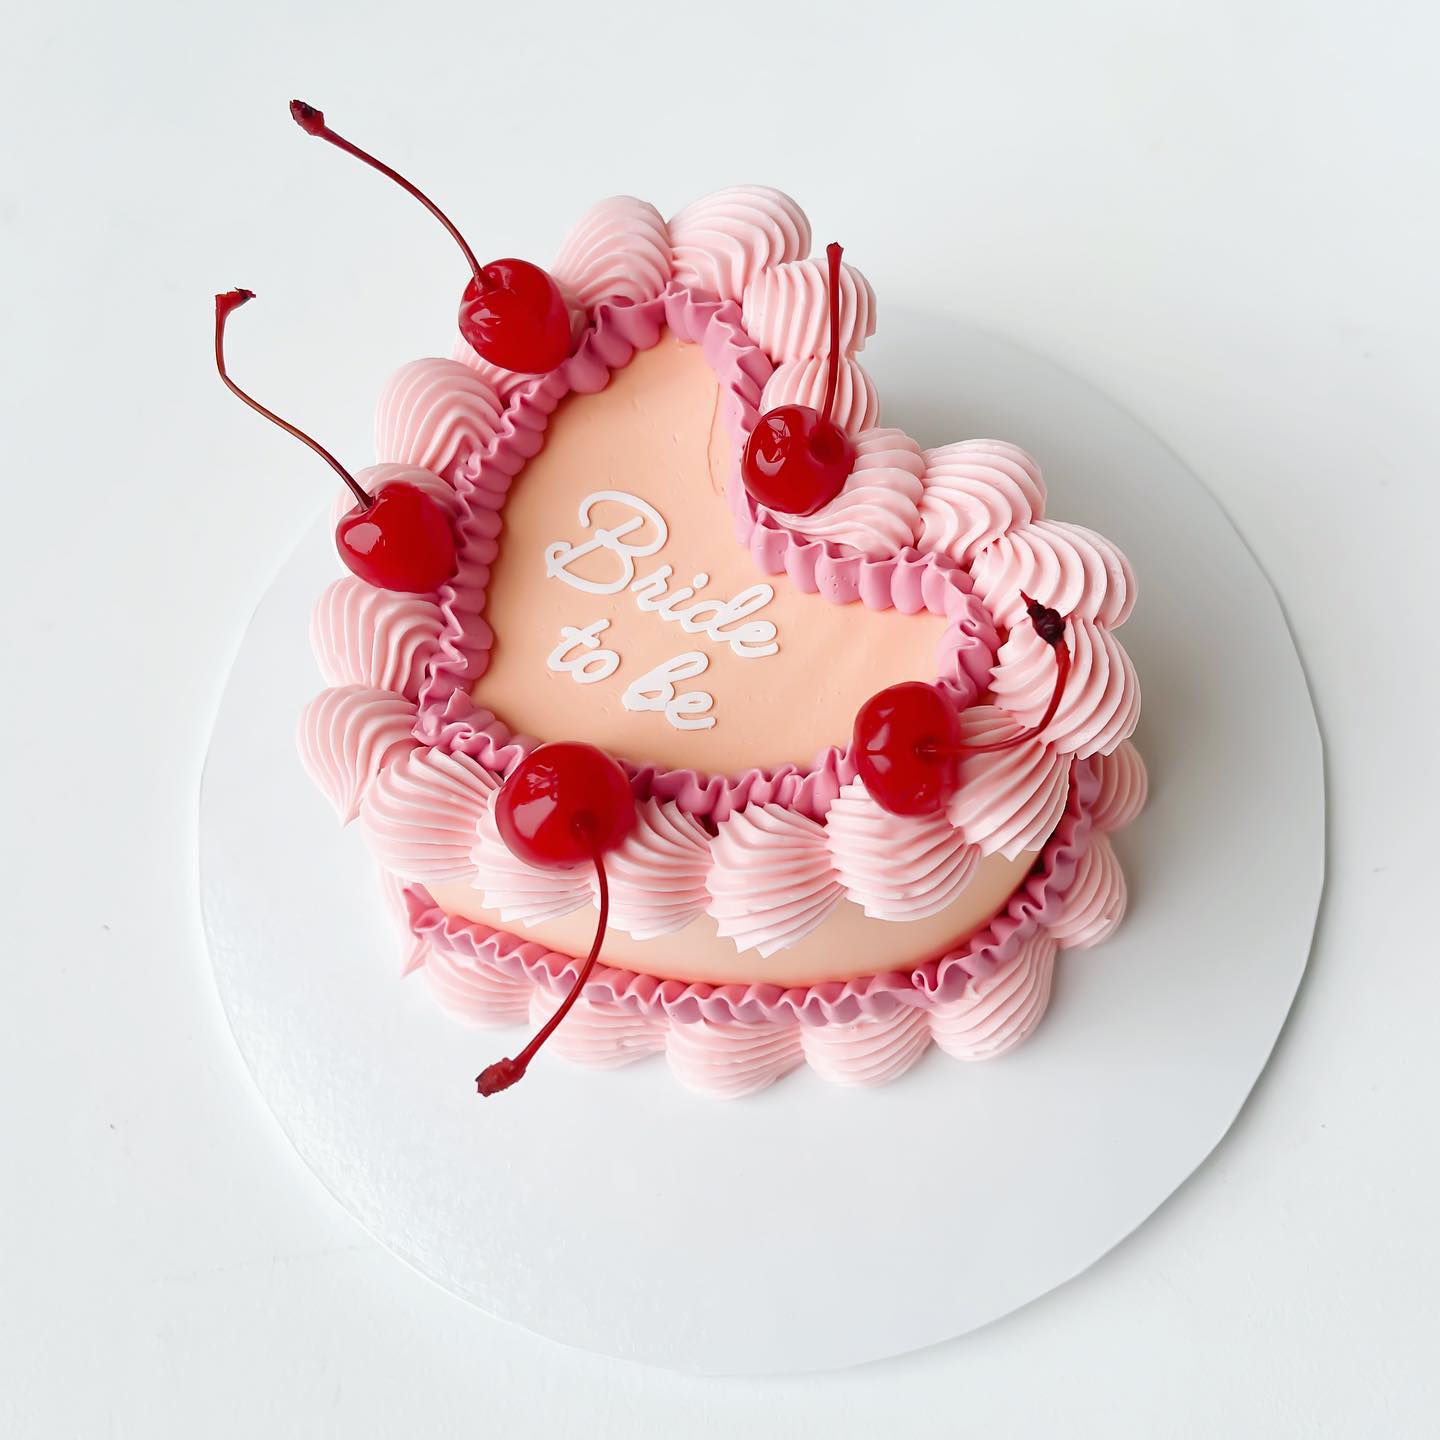 13 Perfectly Sweet Heart Shaped Wedding Cakes | | TopWeddingSites.com